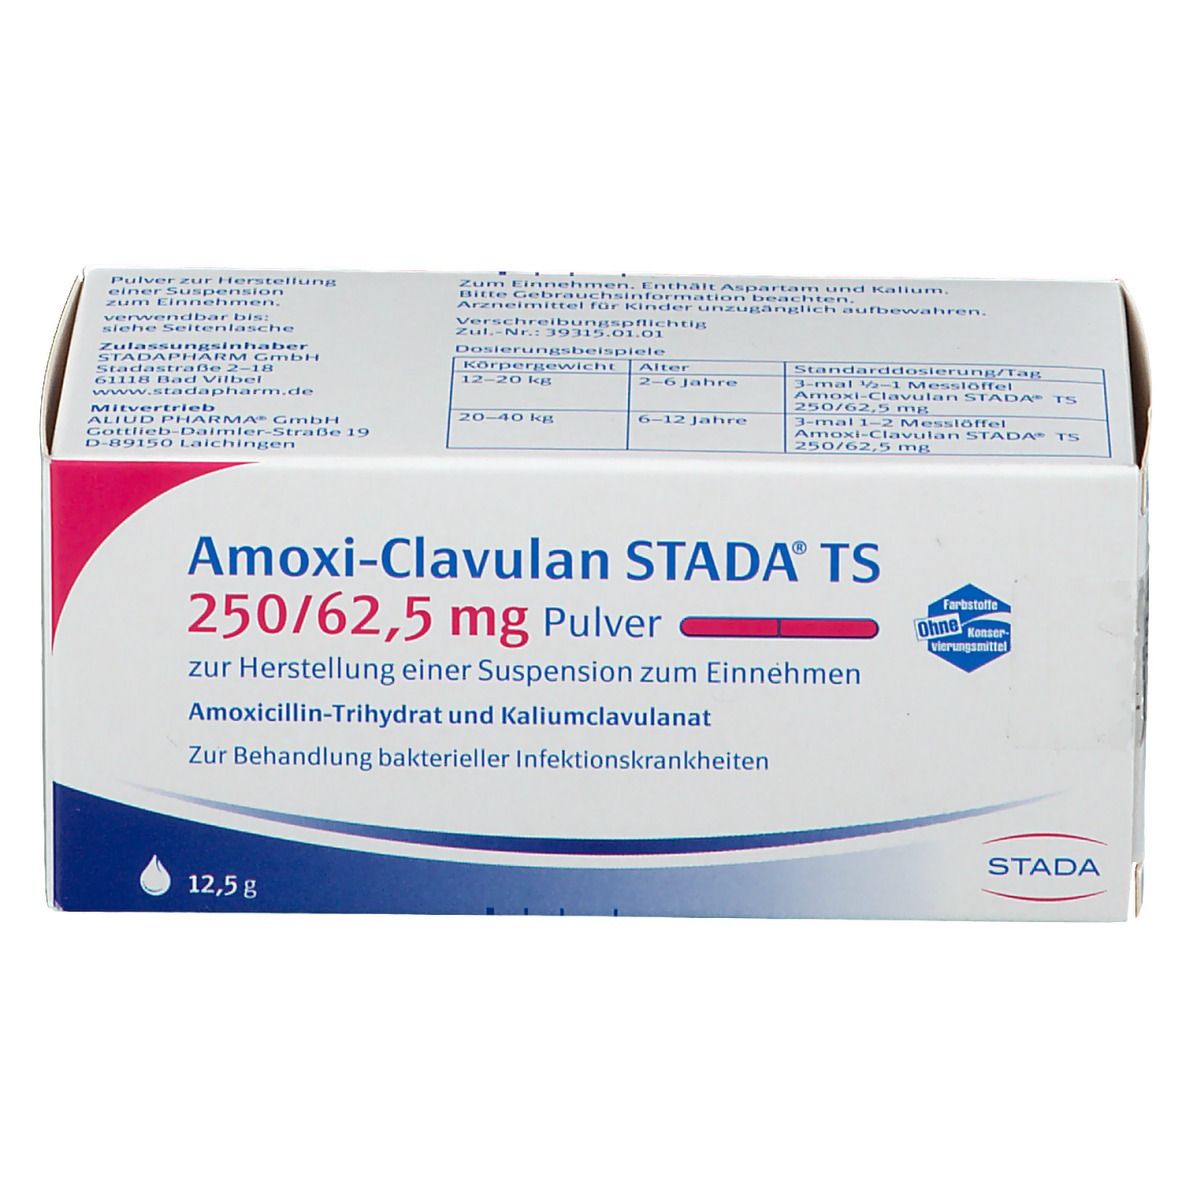 Amoxi-Clavulan STADA® 250/62,5 mg Pulver